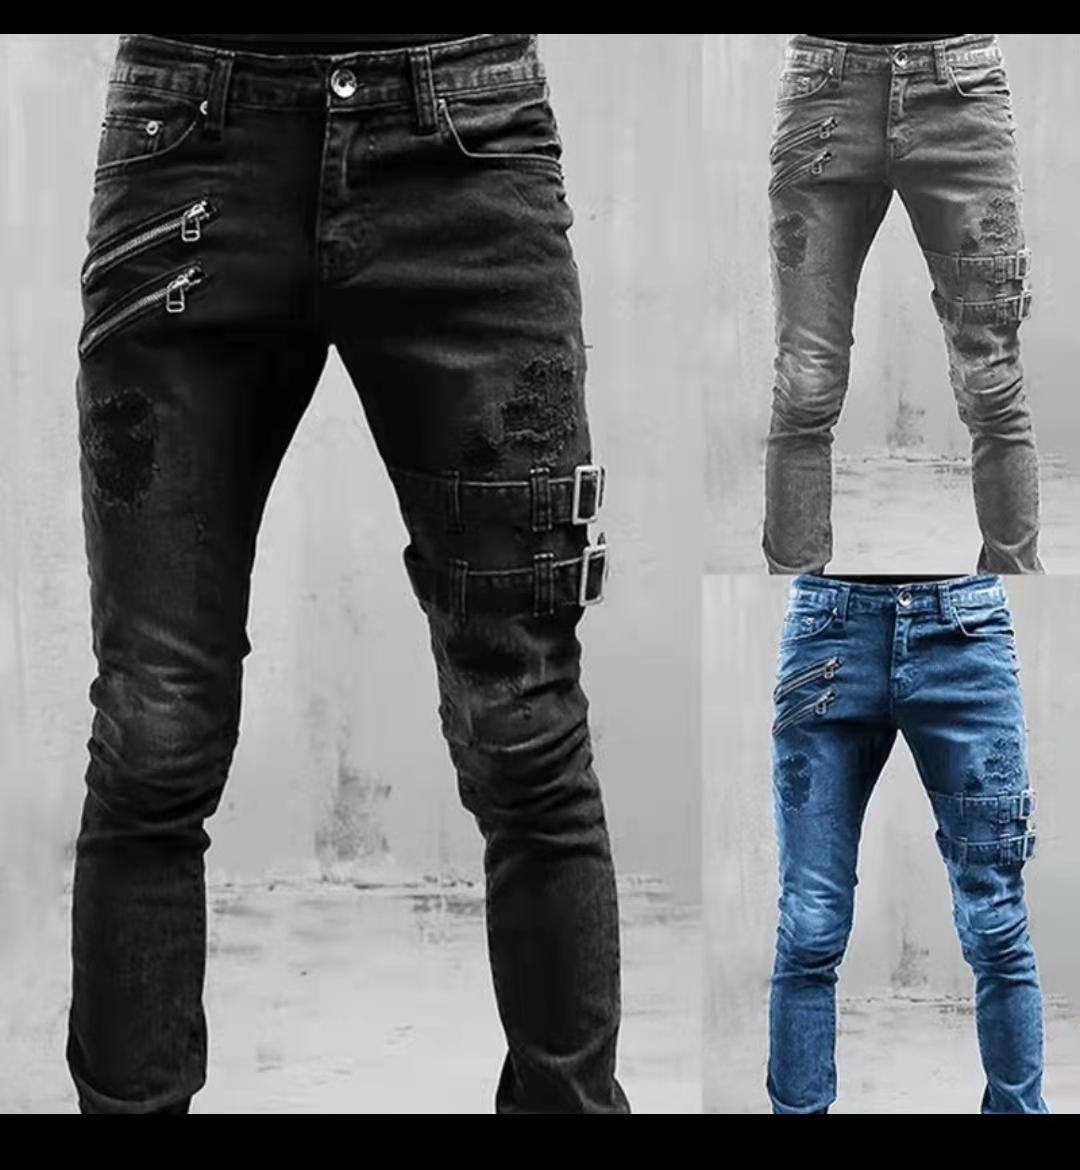 HannaClothingStore HannaClothingStore Men Jeans Personality Popular For Elastic